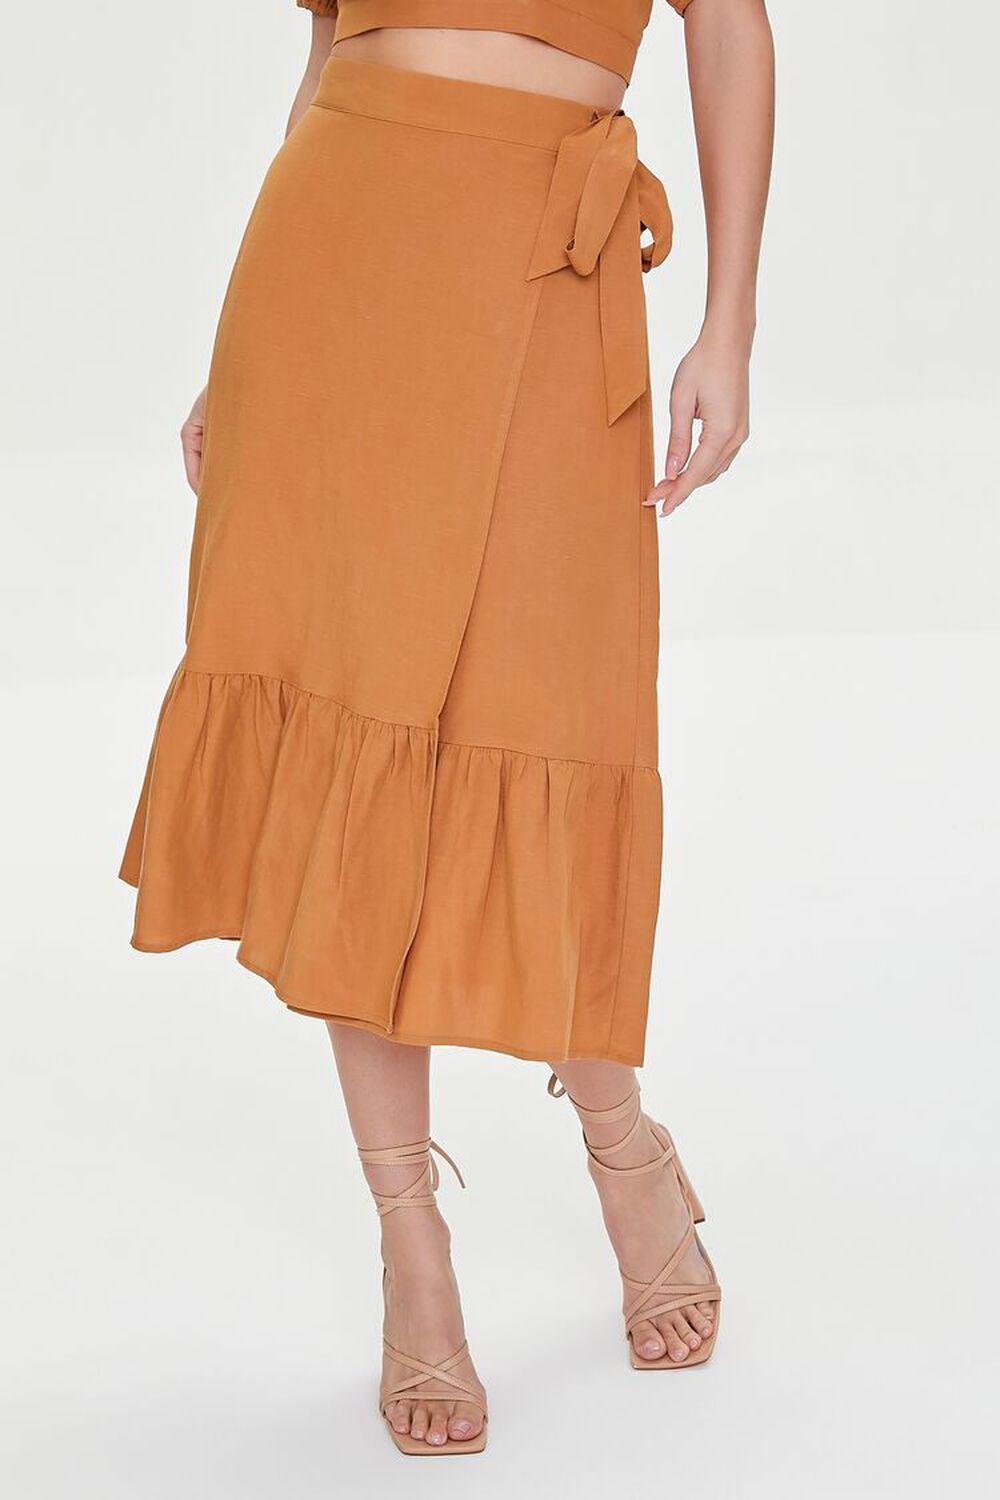 Linen Flounce Midi Skirt, image 2